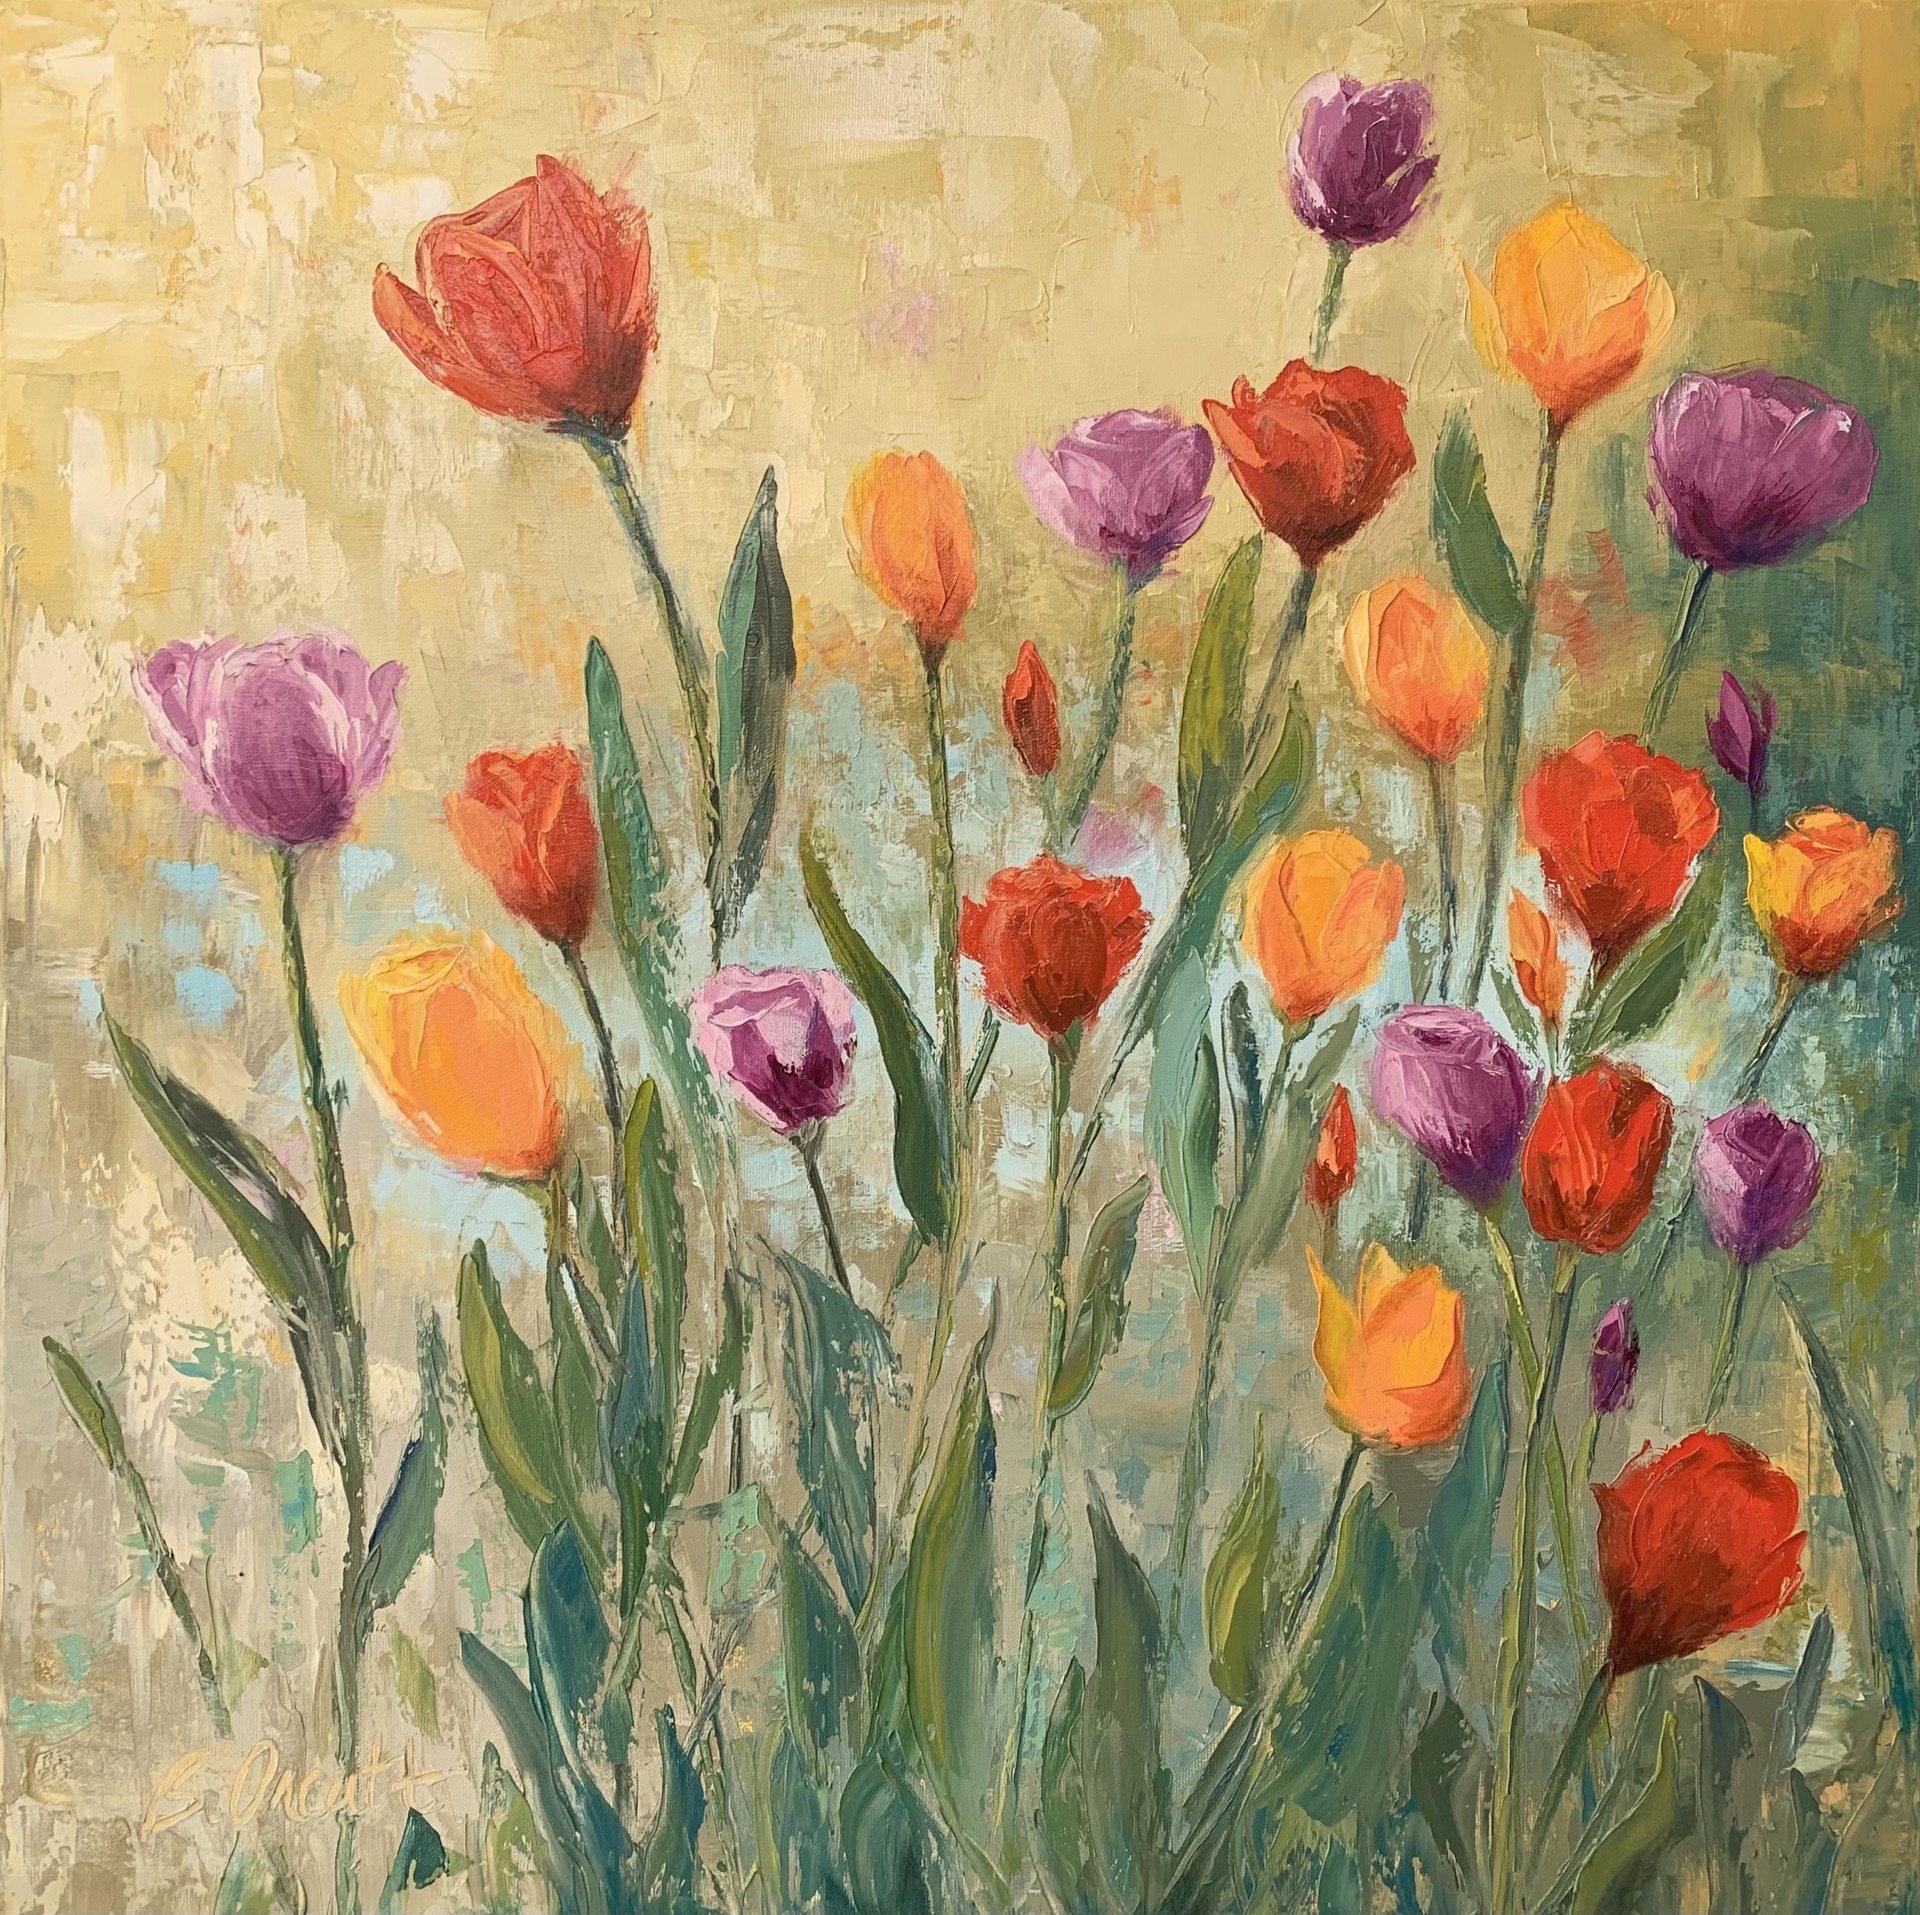 Tiptoe Through the Tulips by Brenda Orcutt